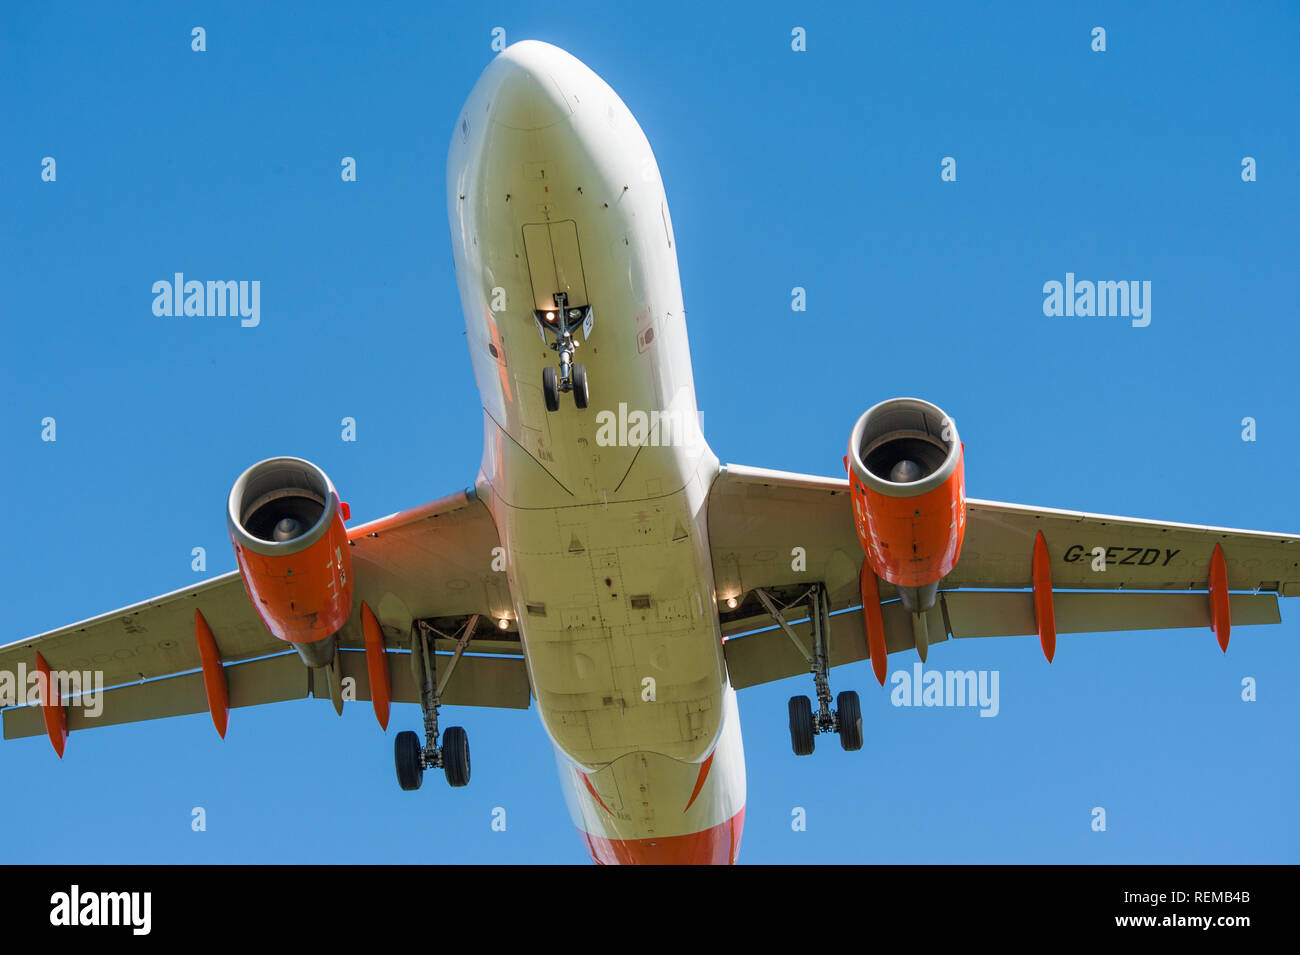 Easyjet landing at bristol airport Stock Photo